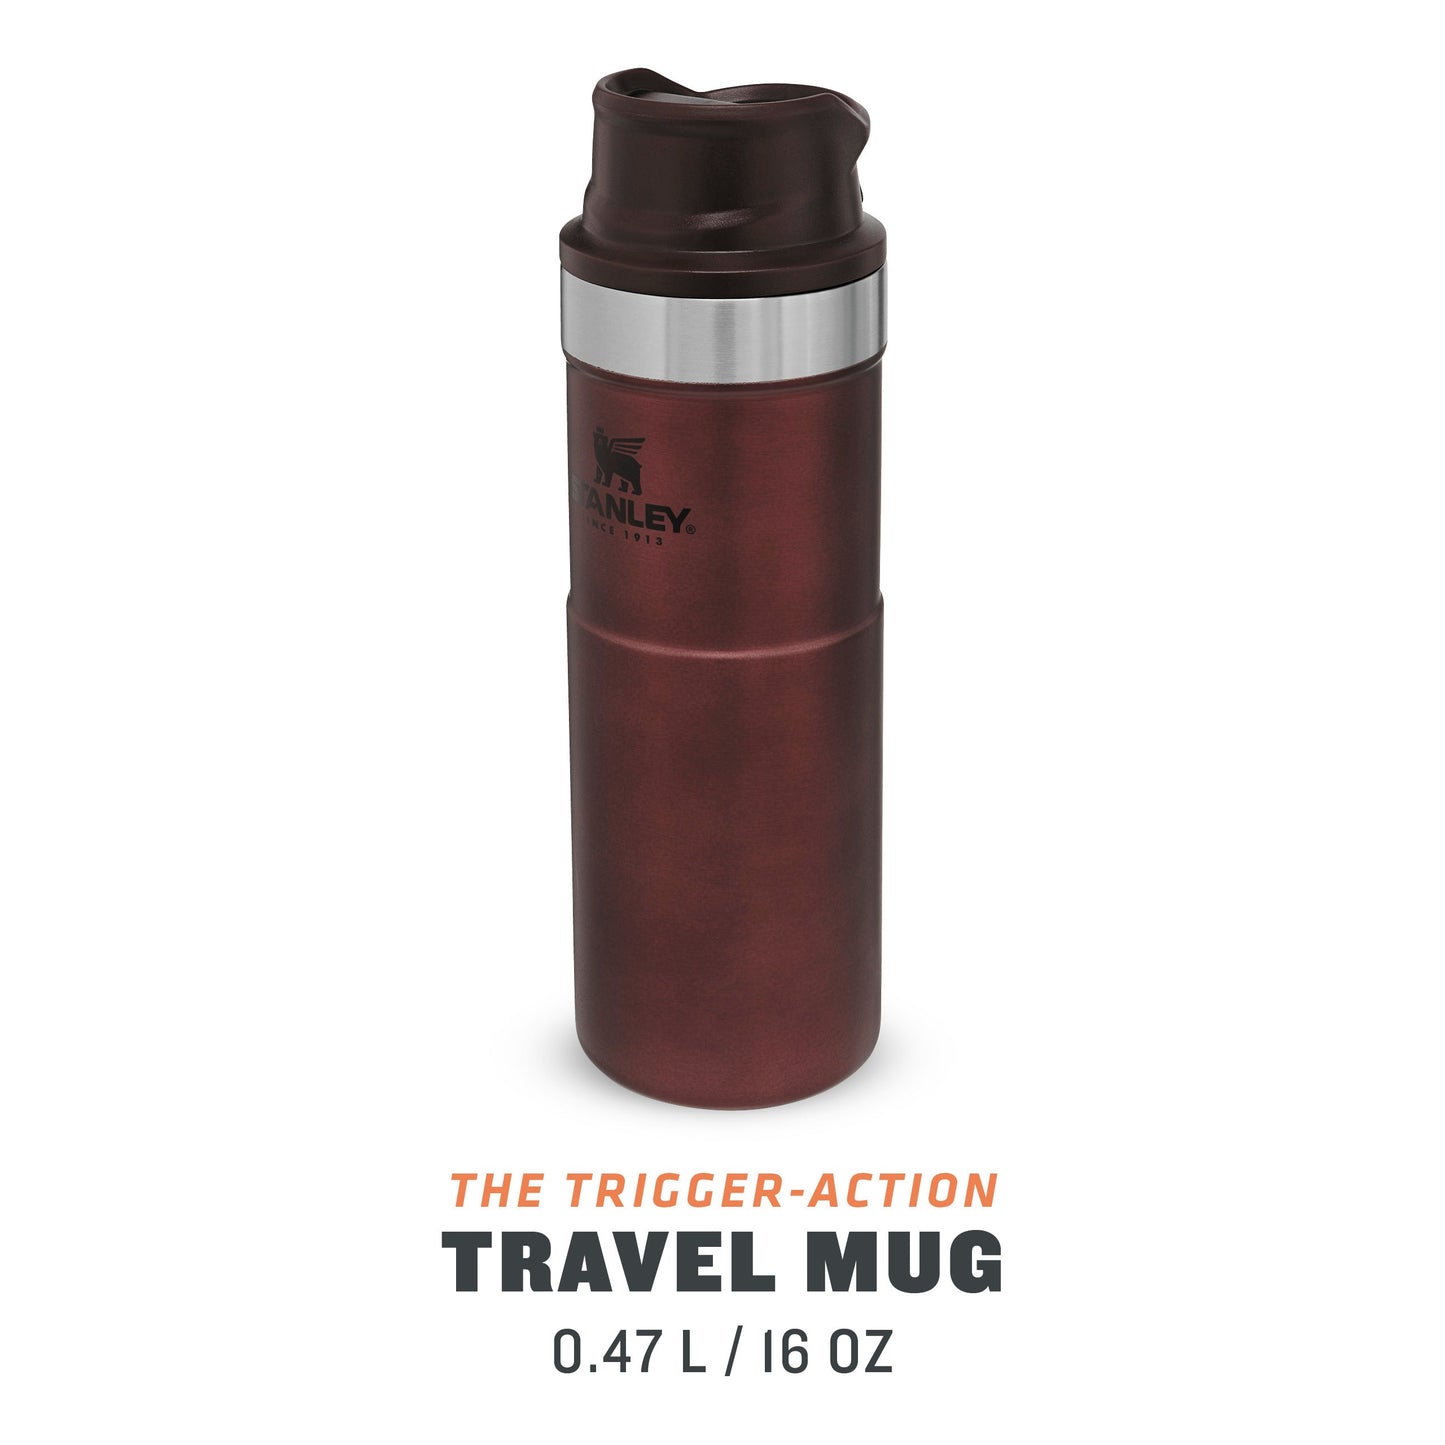 Stanley 0.47L Classic Trigger-Action Travel Mug - Bordo